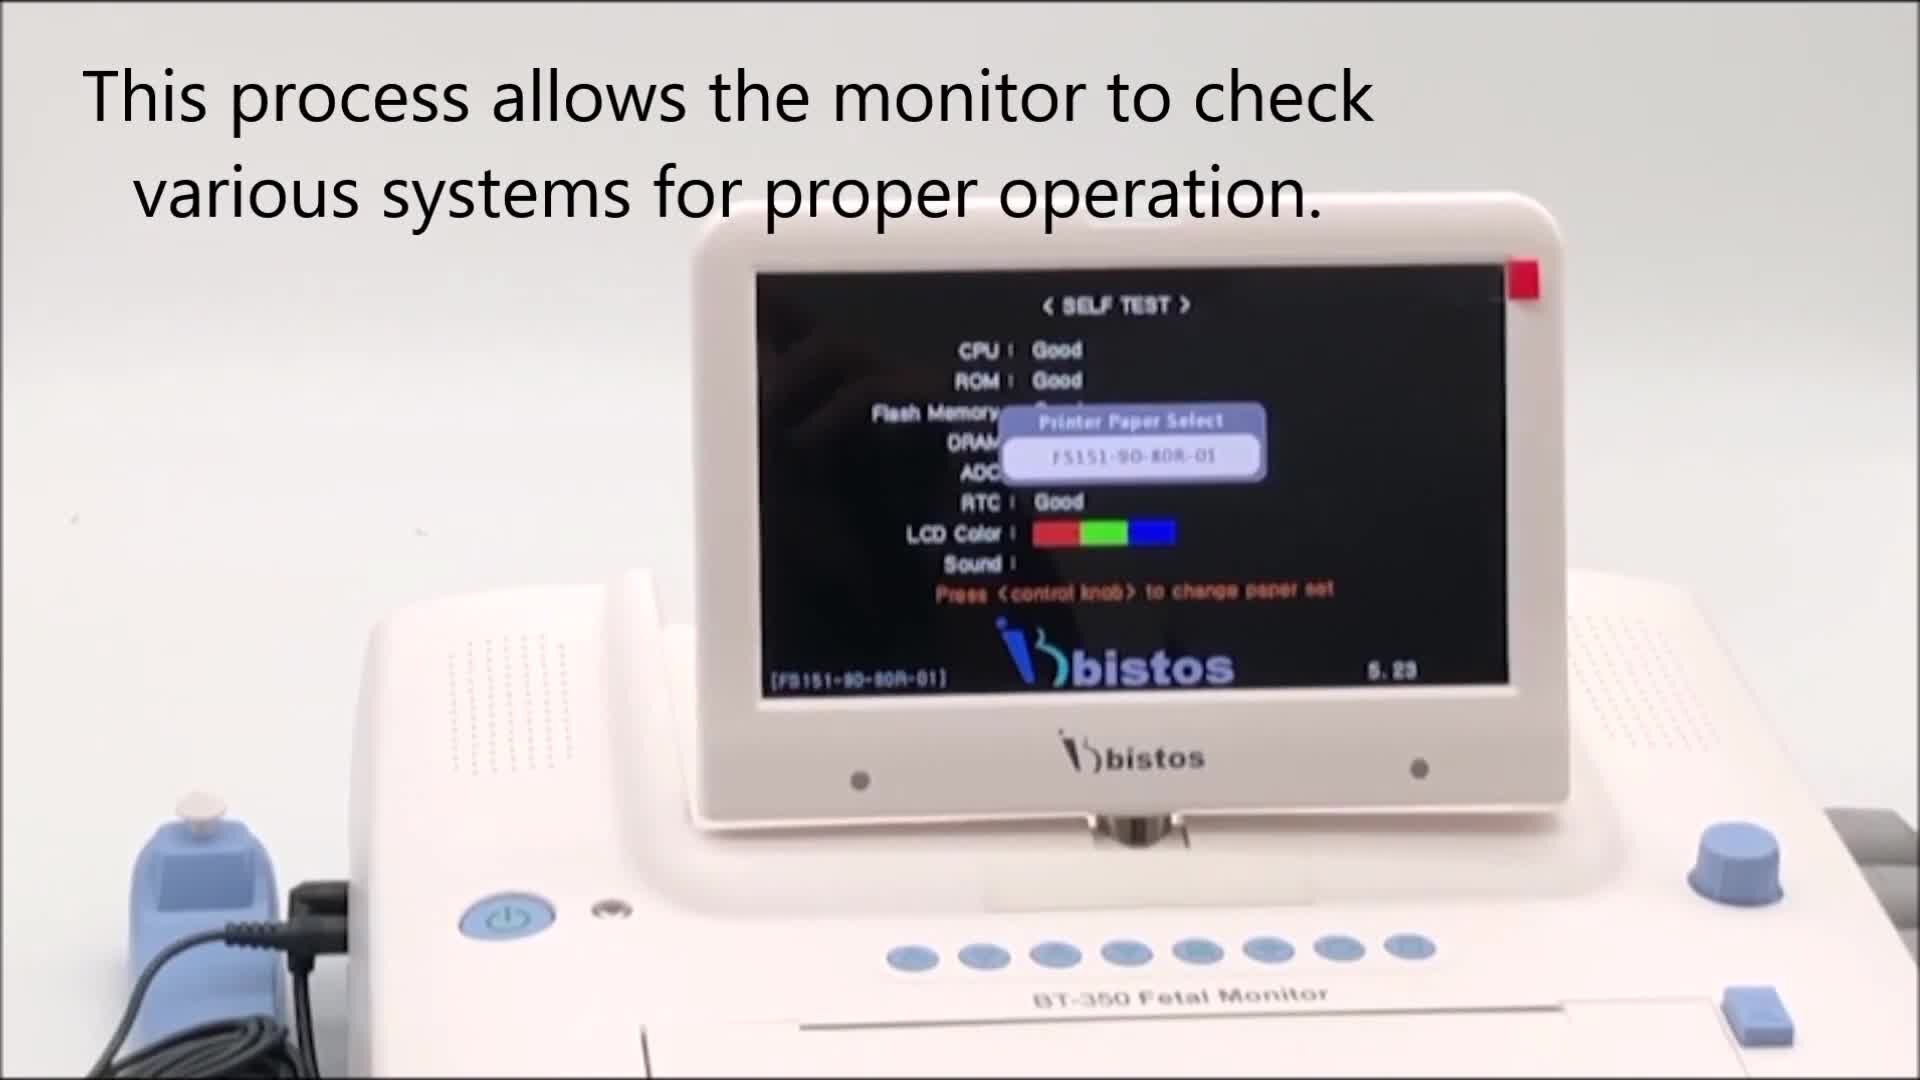 Bistos BT 350 Fetal Monitor